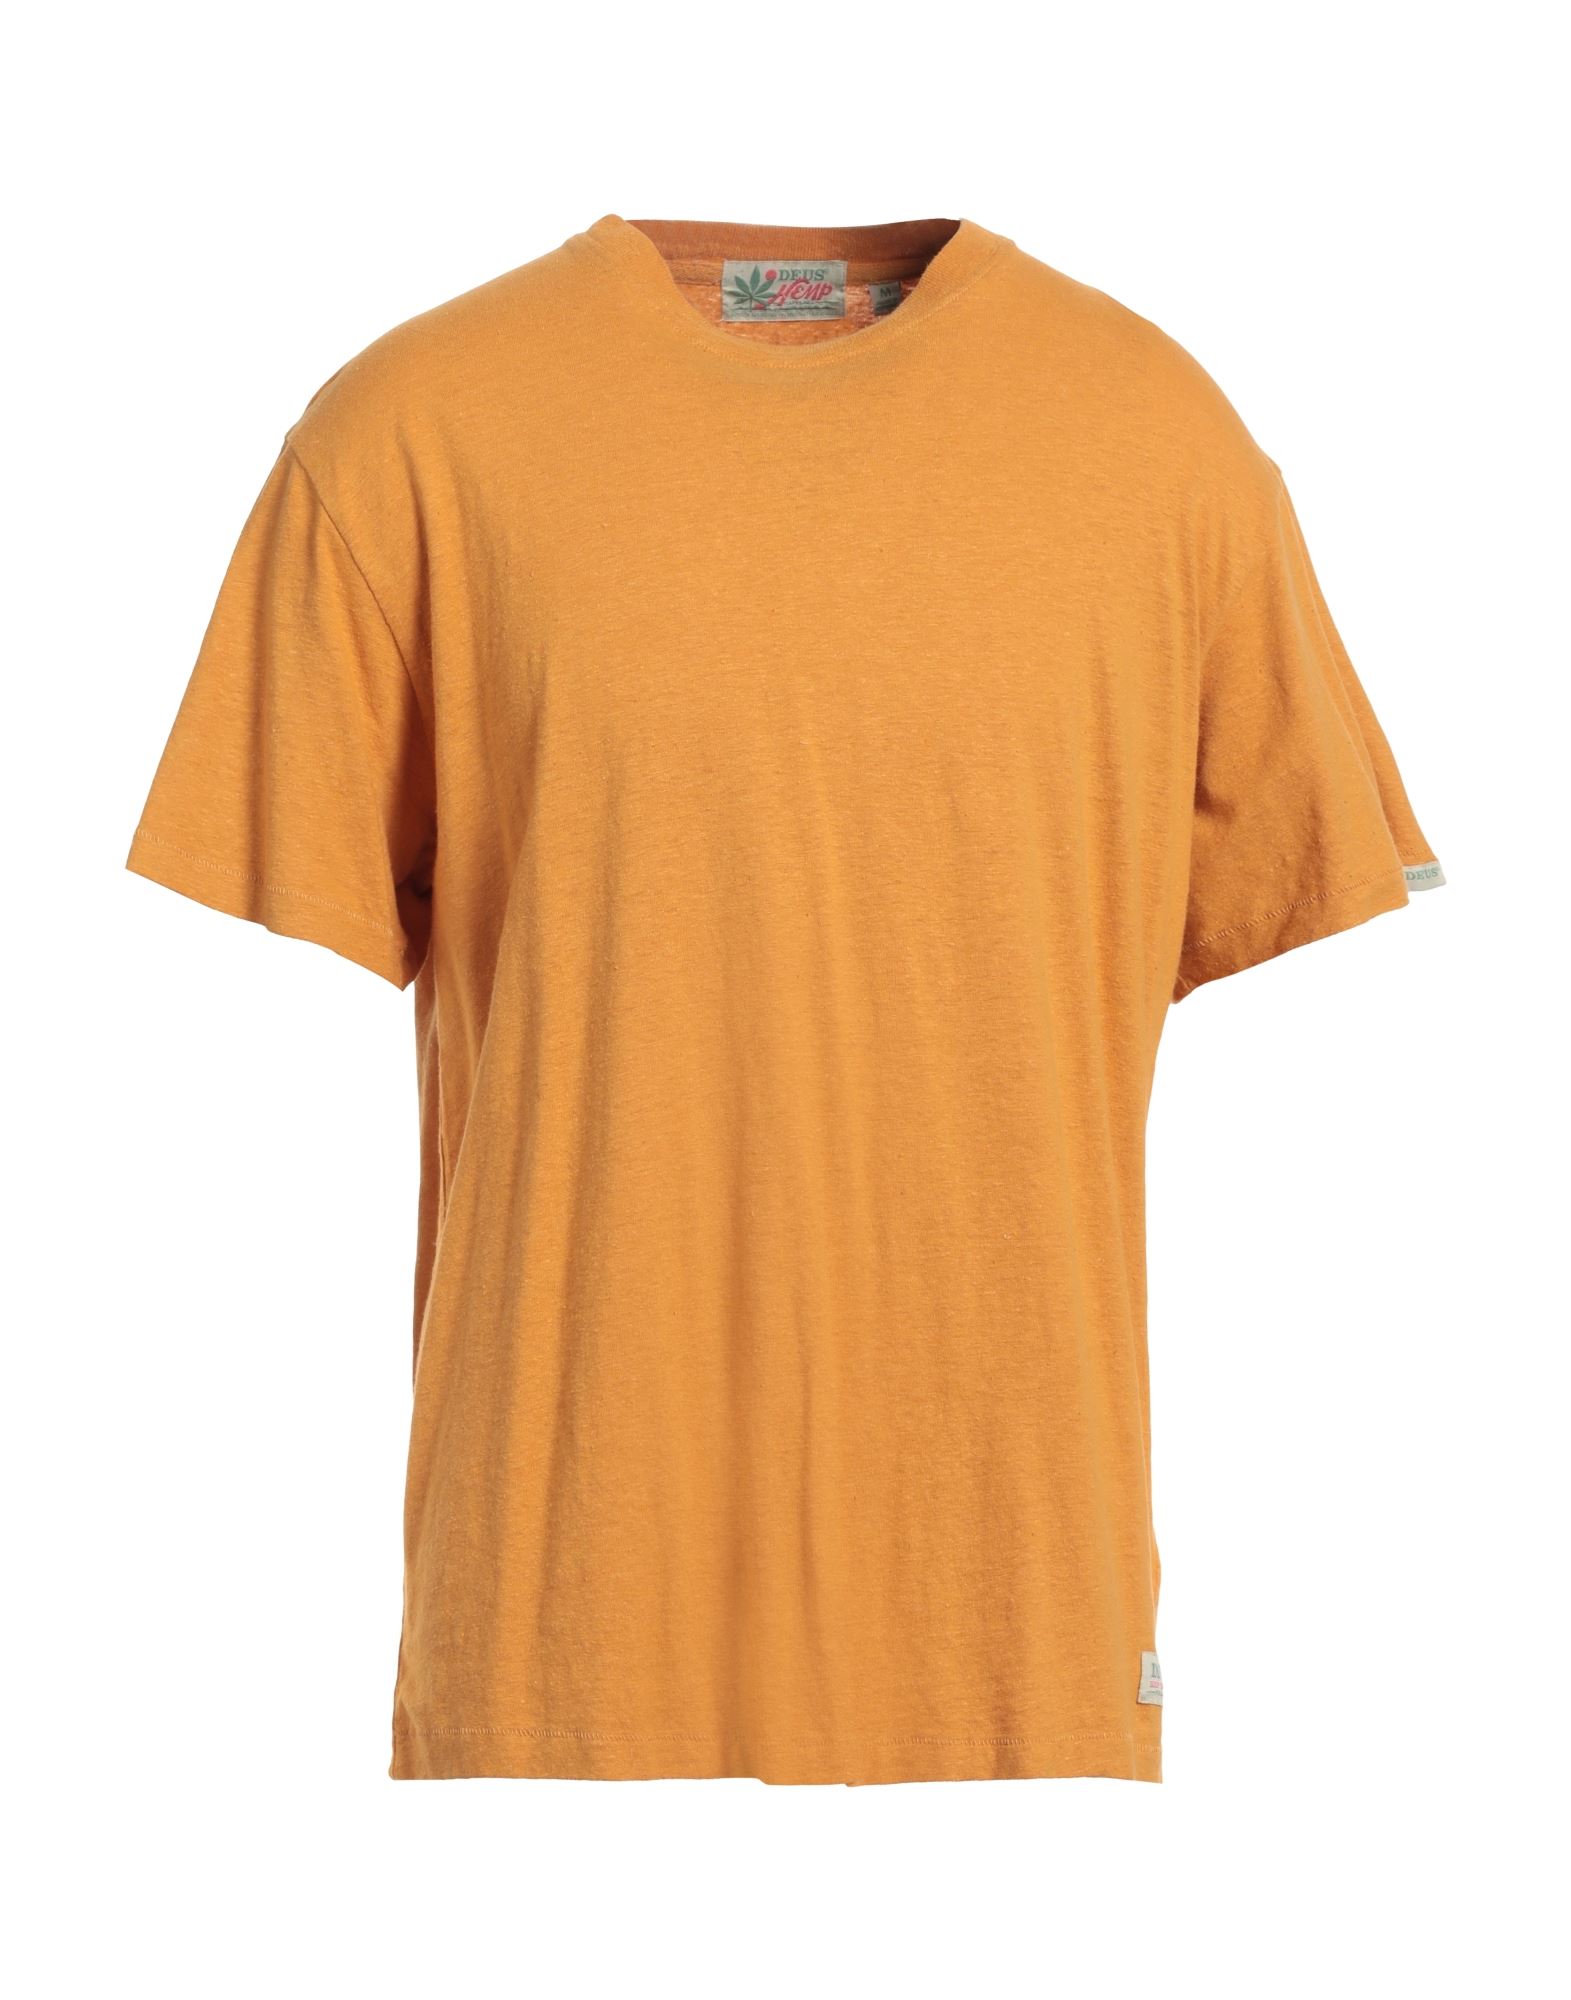 Deus Ex Machina T-shirts In Orange